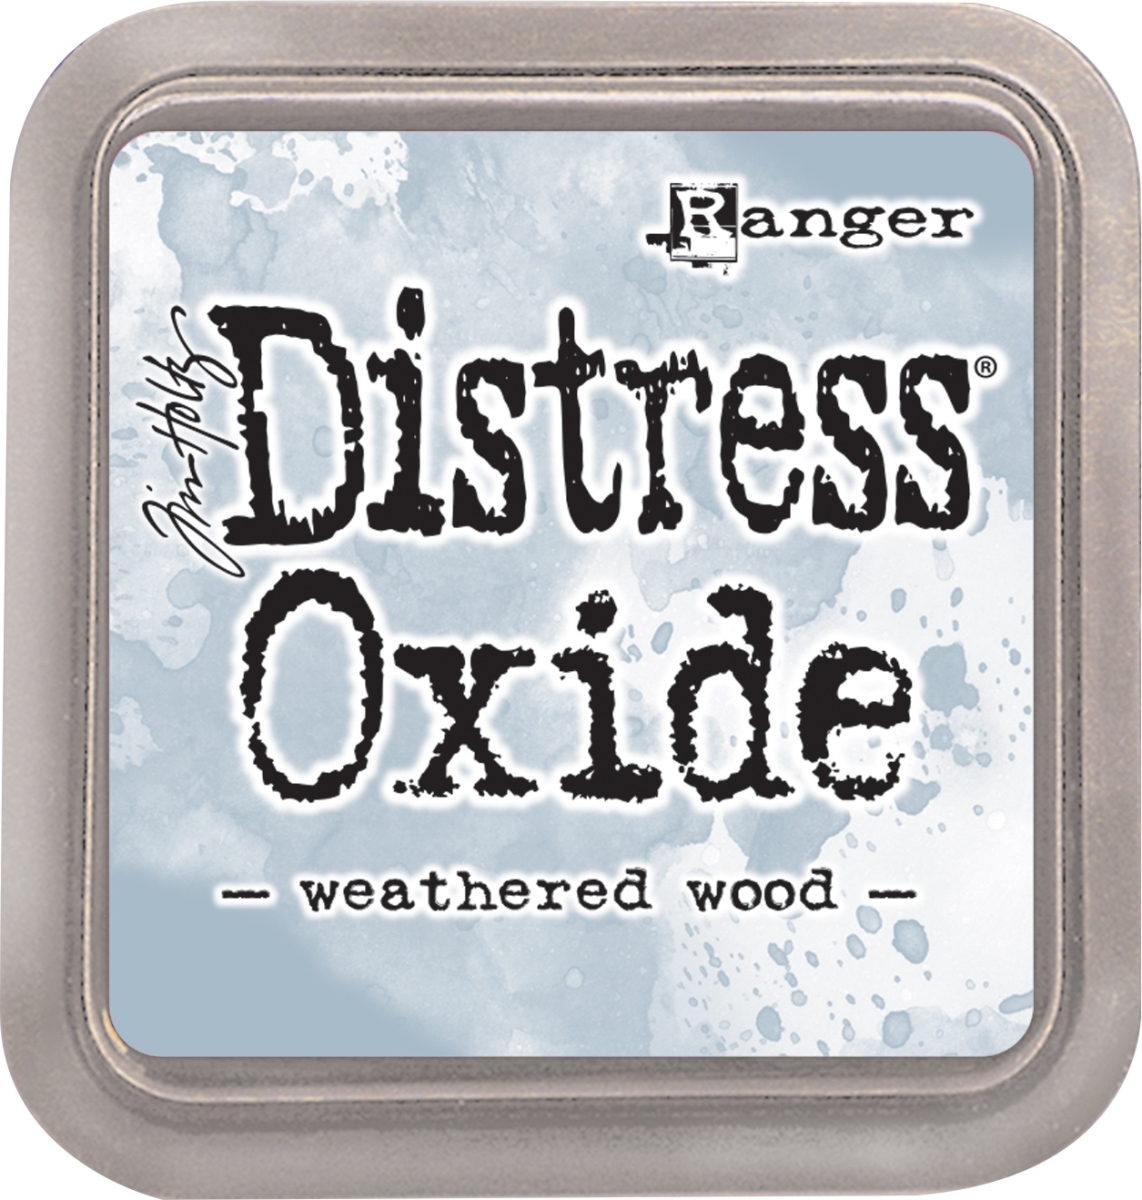 Tdo-56331 Tim Holtz Distress Oxides Ink Pad, Weathered Wood